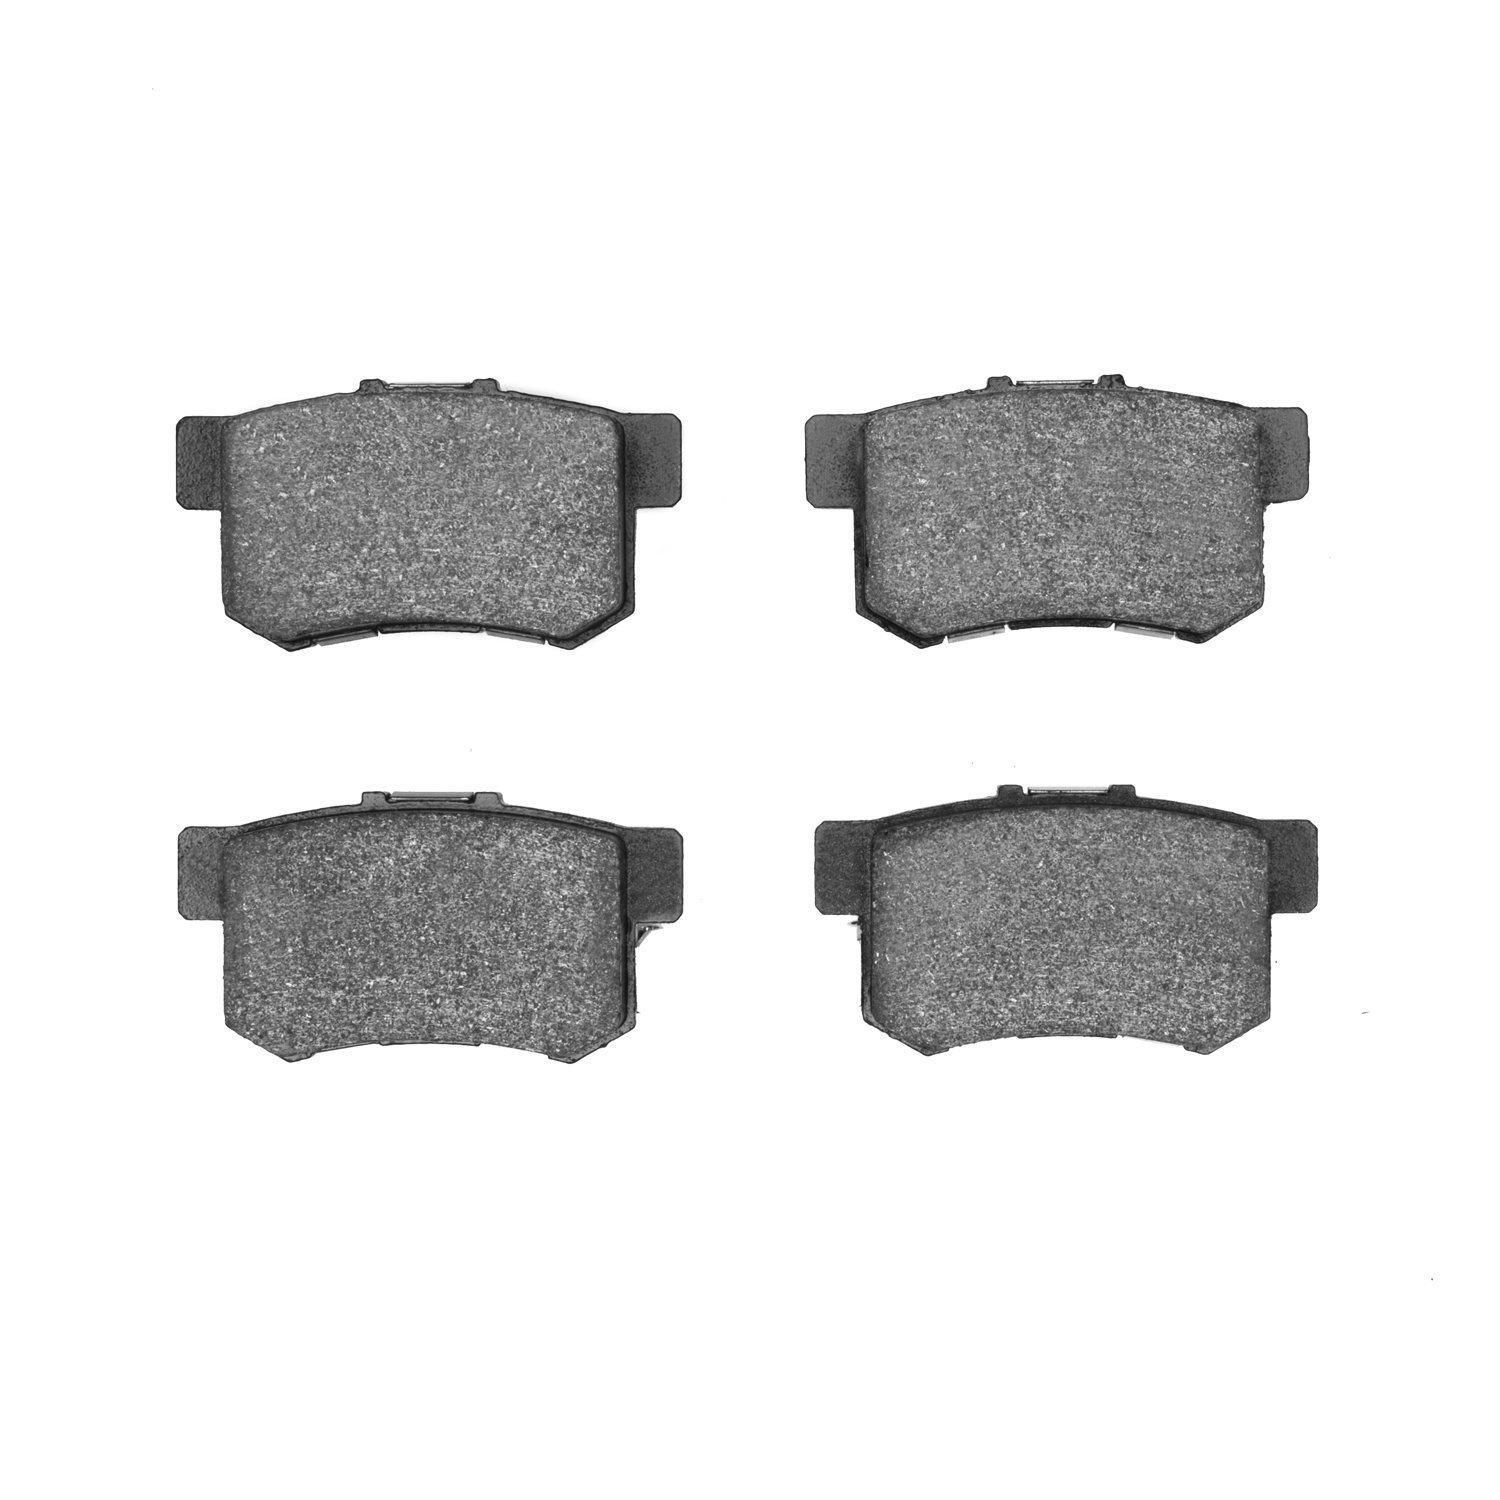 1311-0537-00 3000-Series Semi-Metallic Brake Pads, Fits Select Multiple Makes/Models, Position: Rear